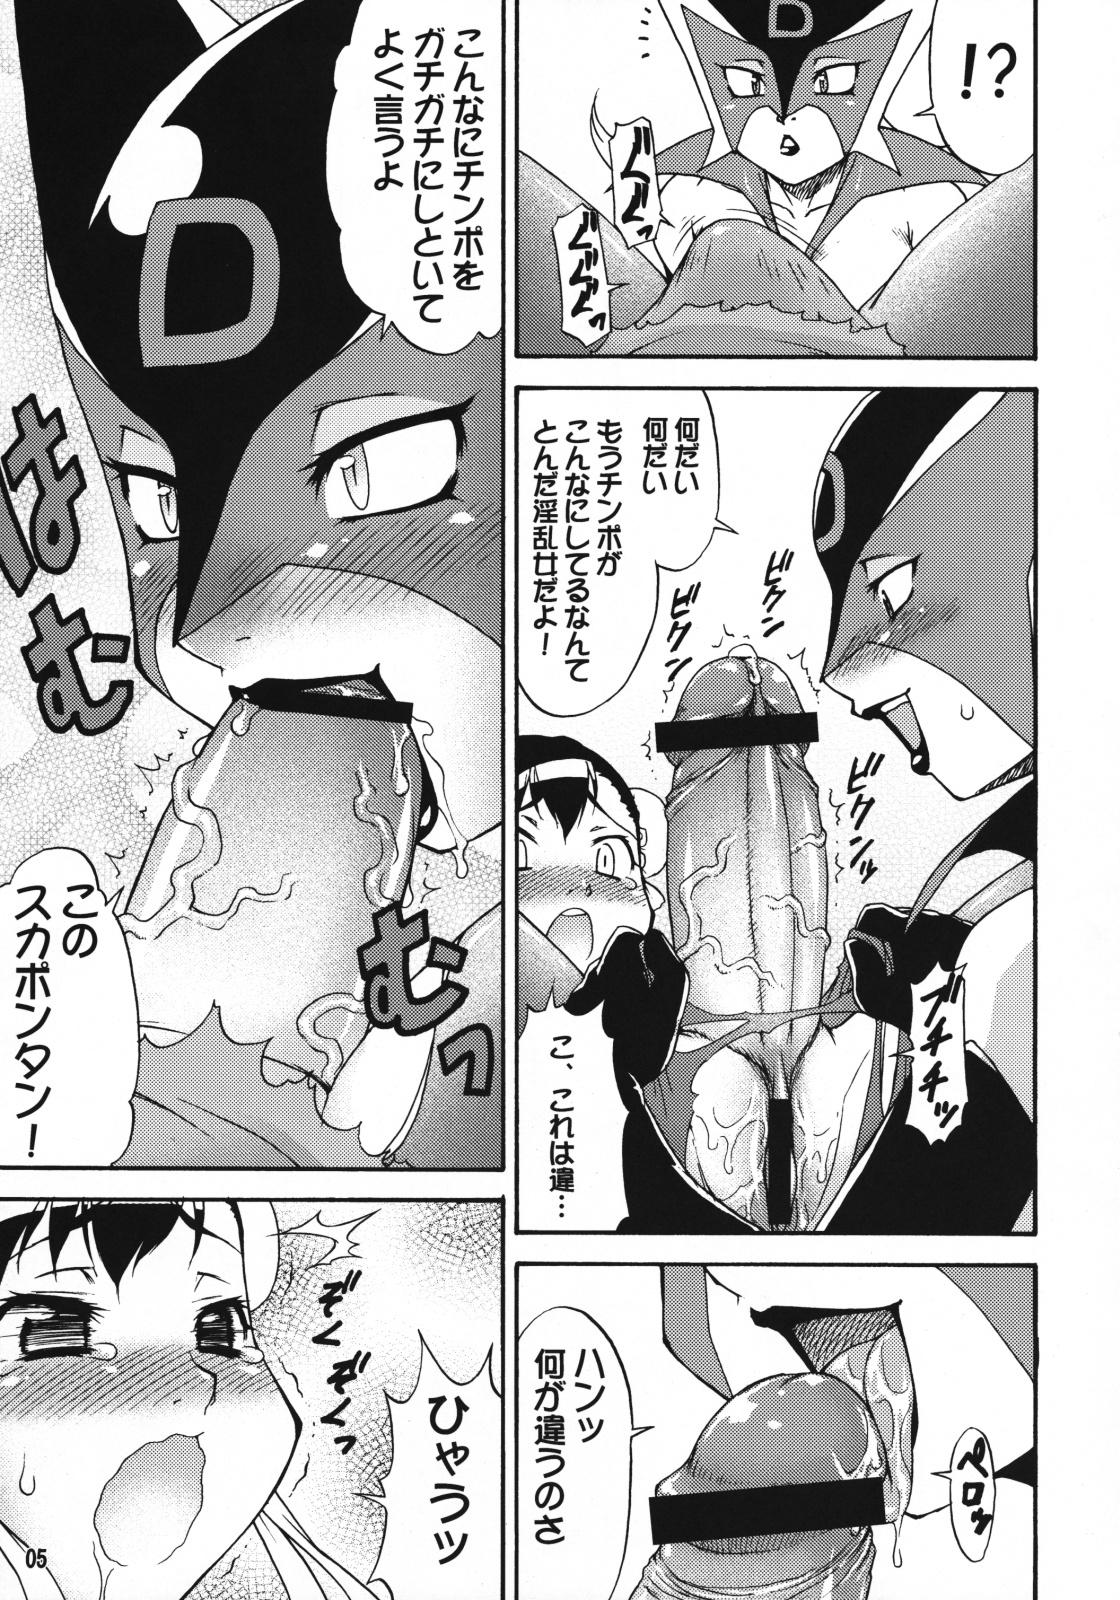 Cdzinha Mikawa Ondo 6 - Street fighter Darkstalkers Princess crown Cyberbots Yatterman Tease - Page 4